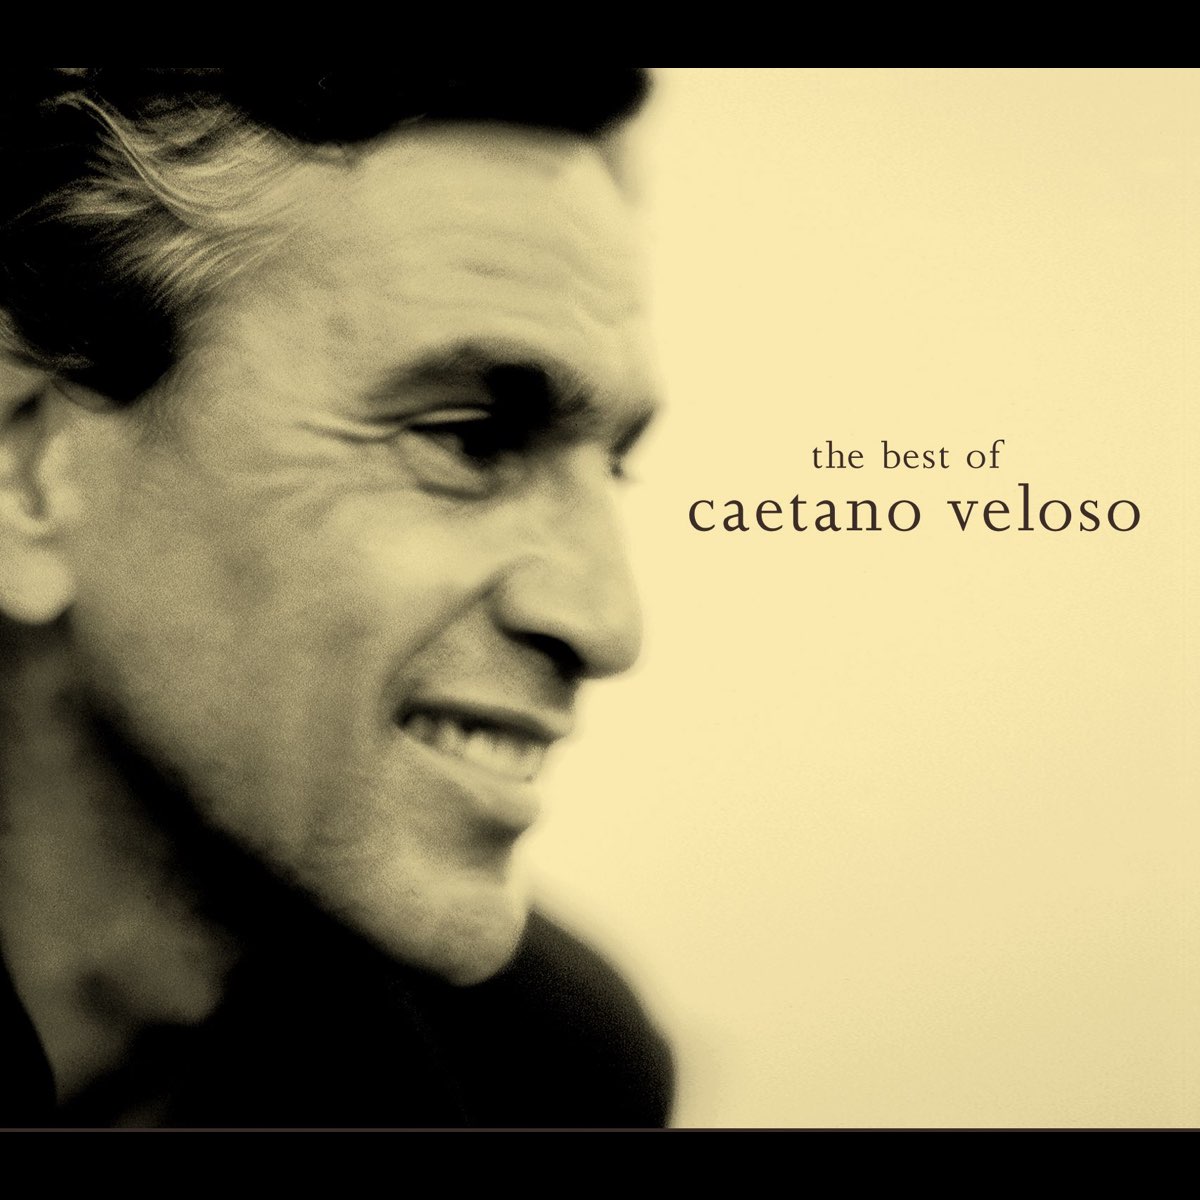 The Best of Caetano Veloso - Album by Caetano Veloso - Apple Music